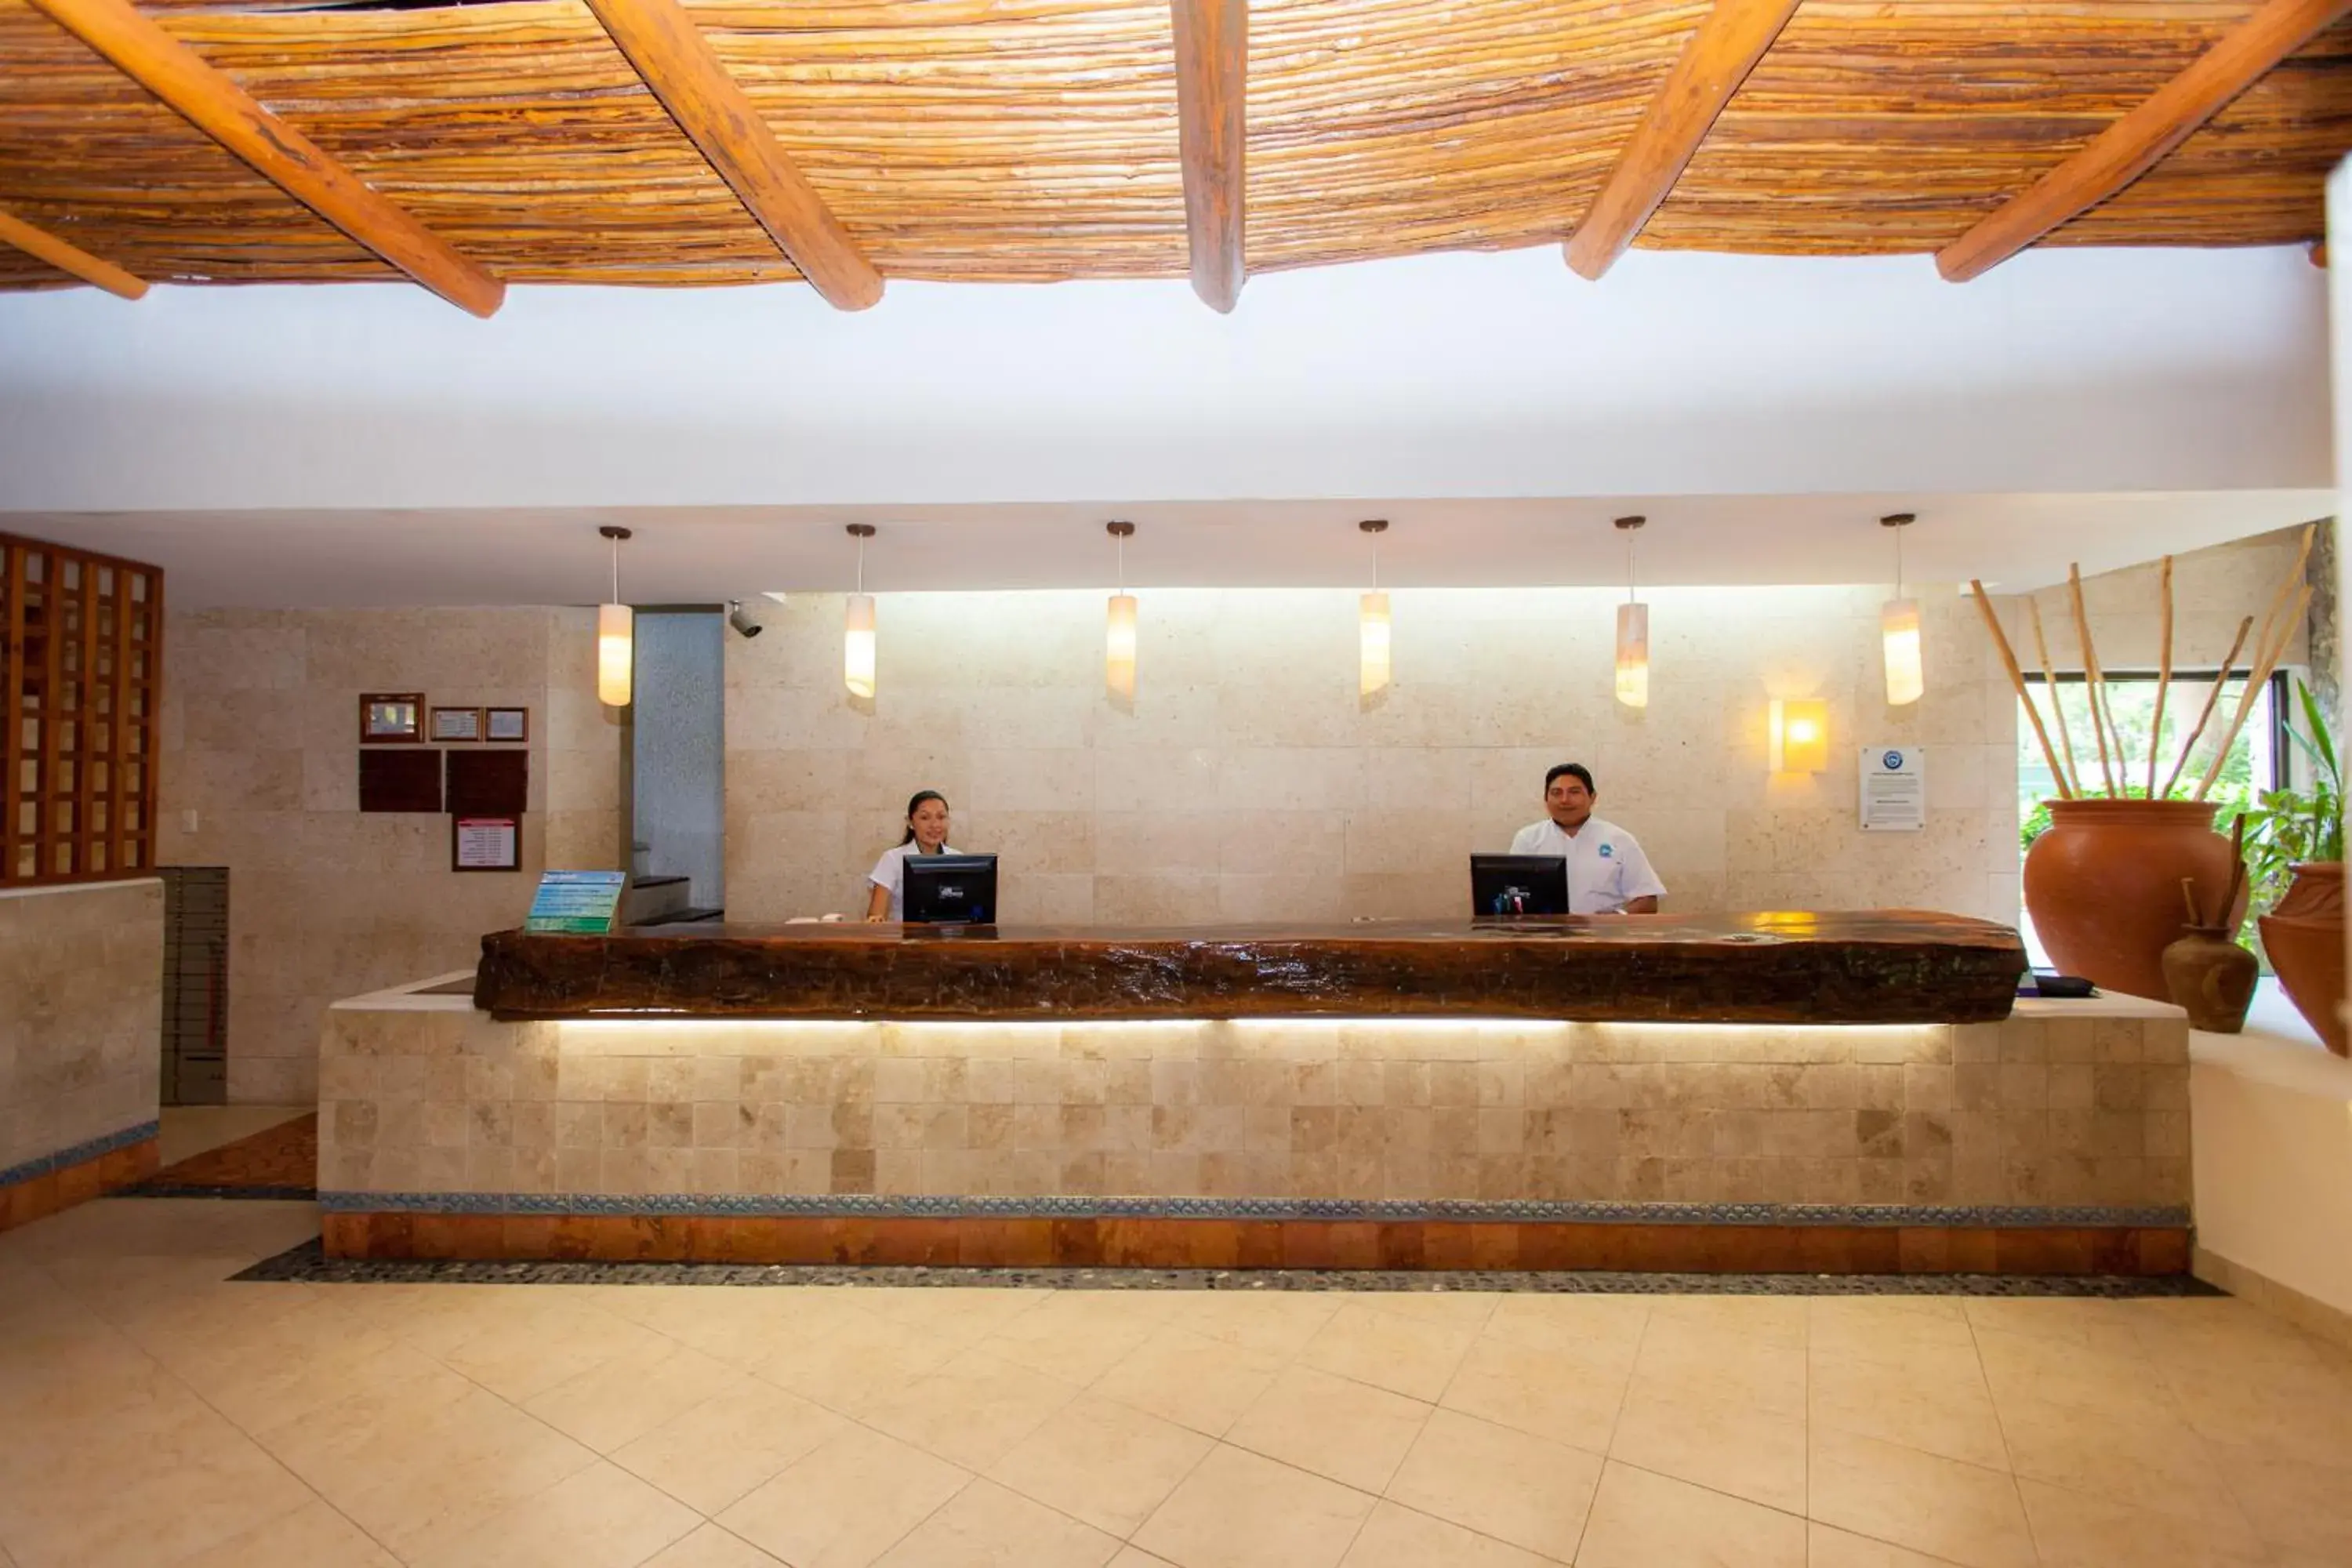 Lobby or reception in Casa del Mar Cozumel Hotel & Dive Resort